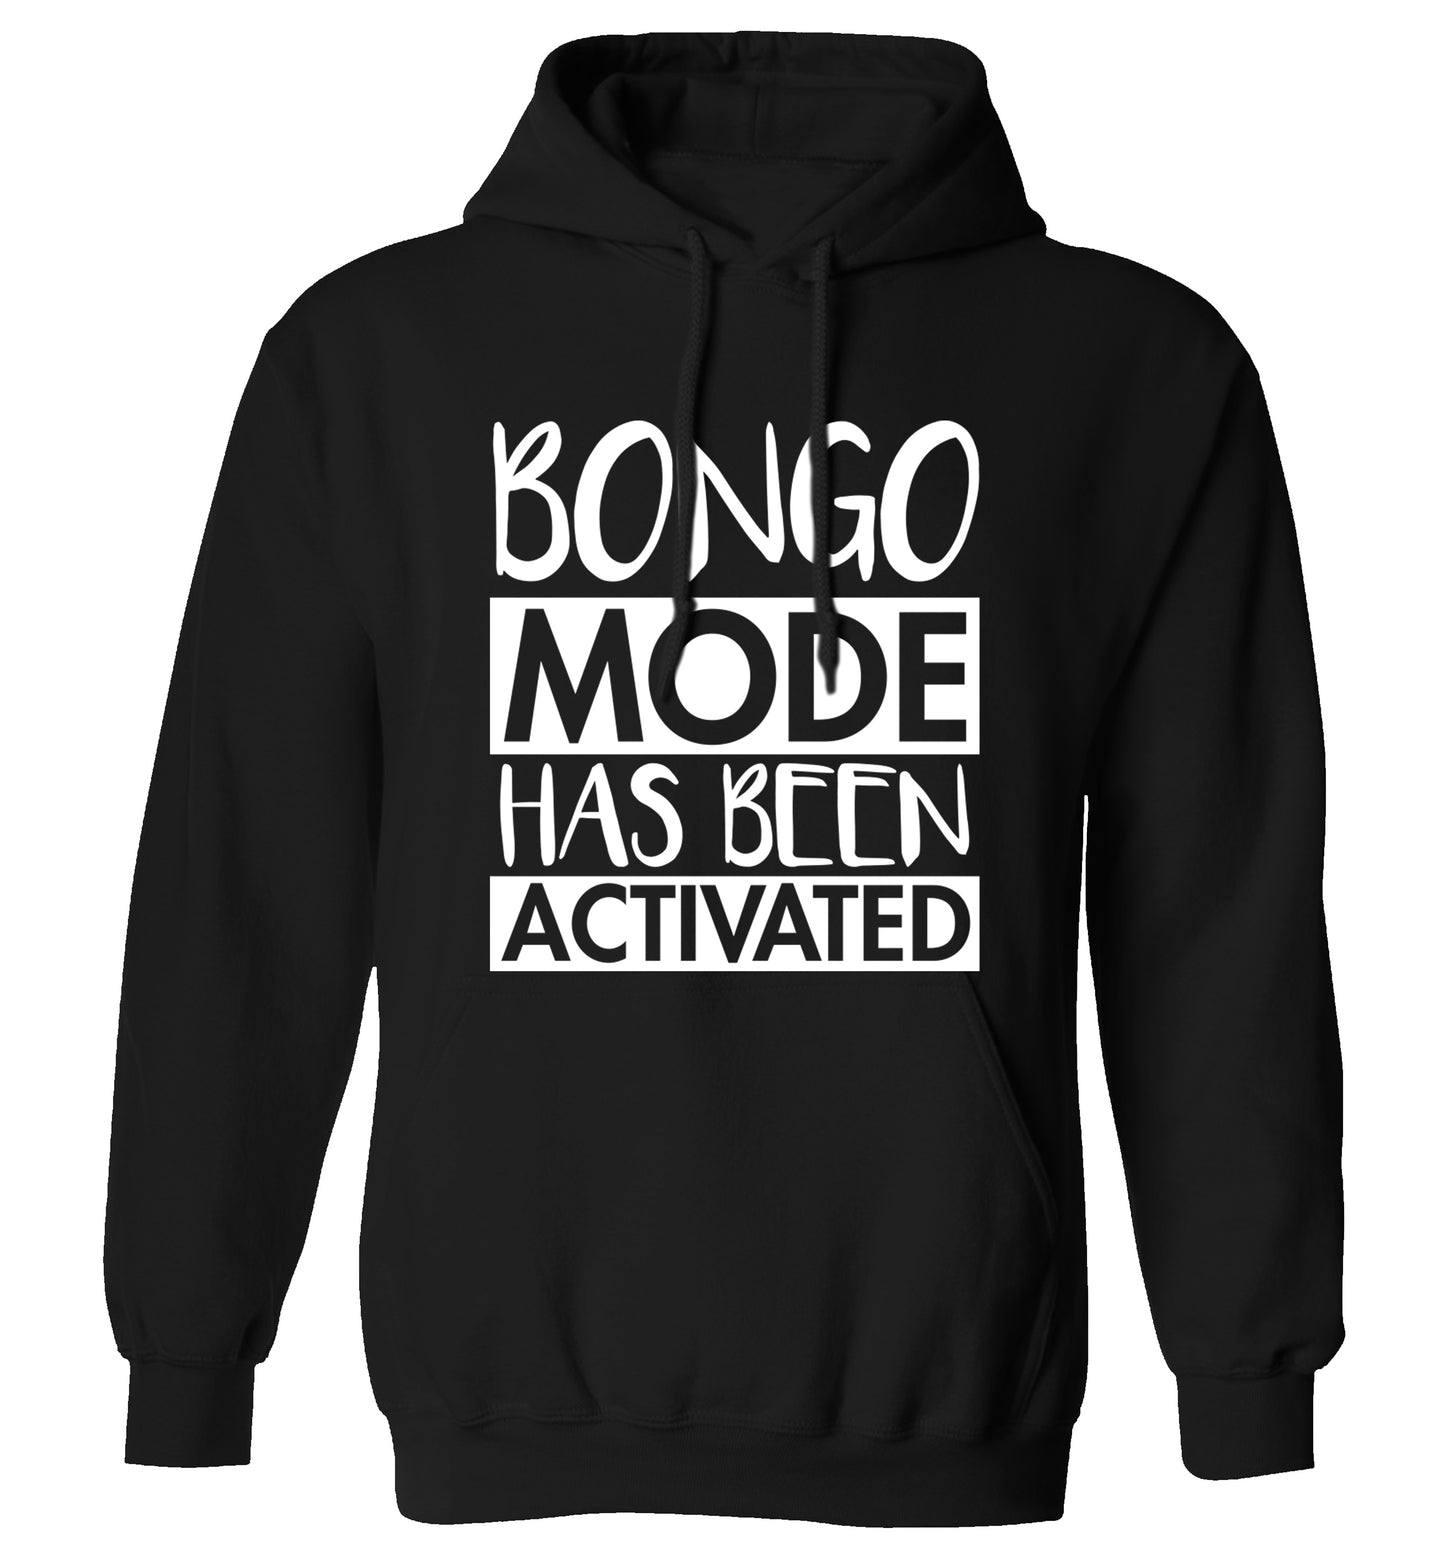 Bongo mode has been activated adults unisexblack hoodie 2XL